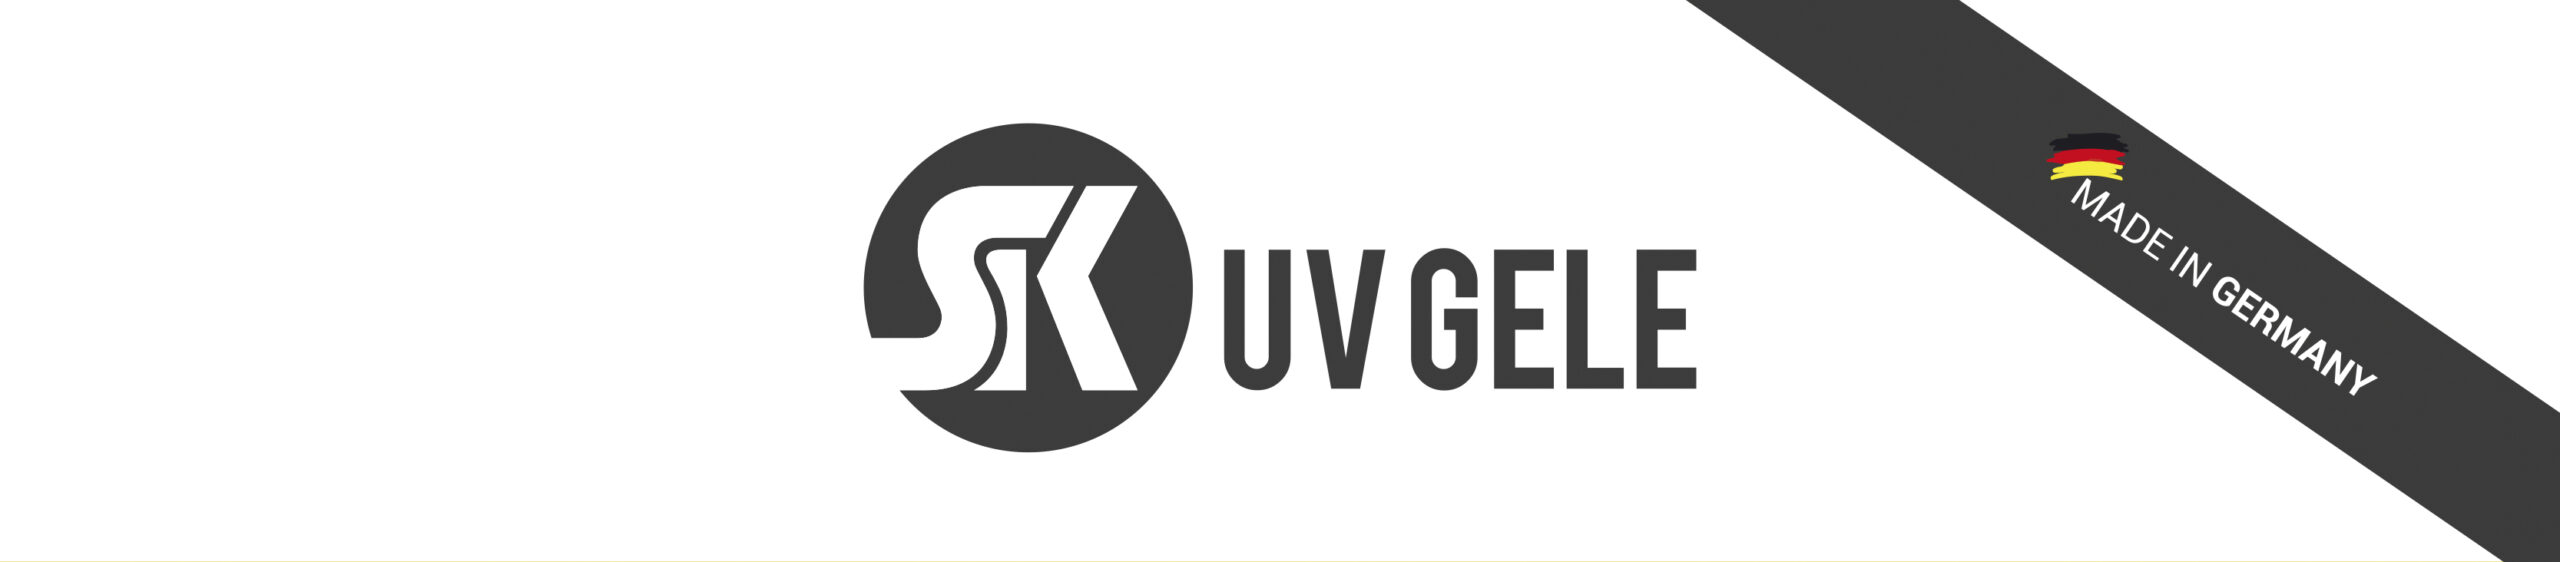 SK UV Gele Logo